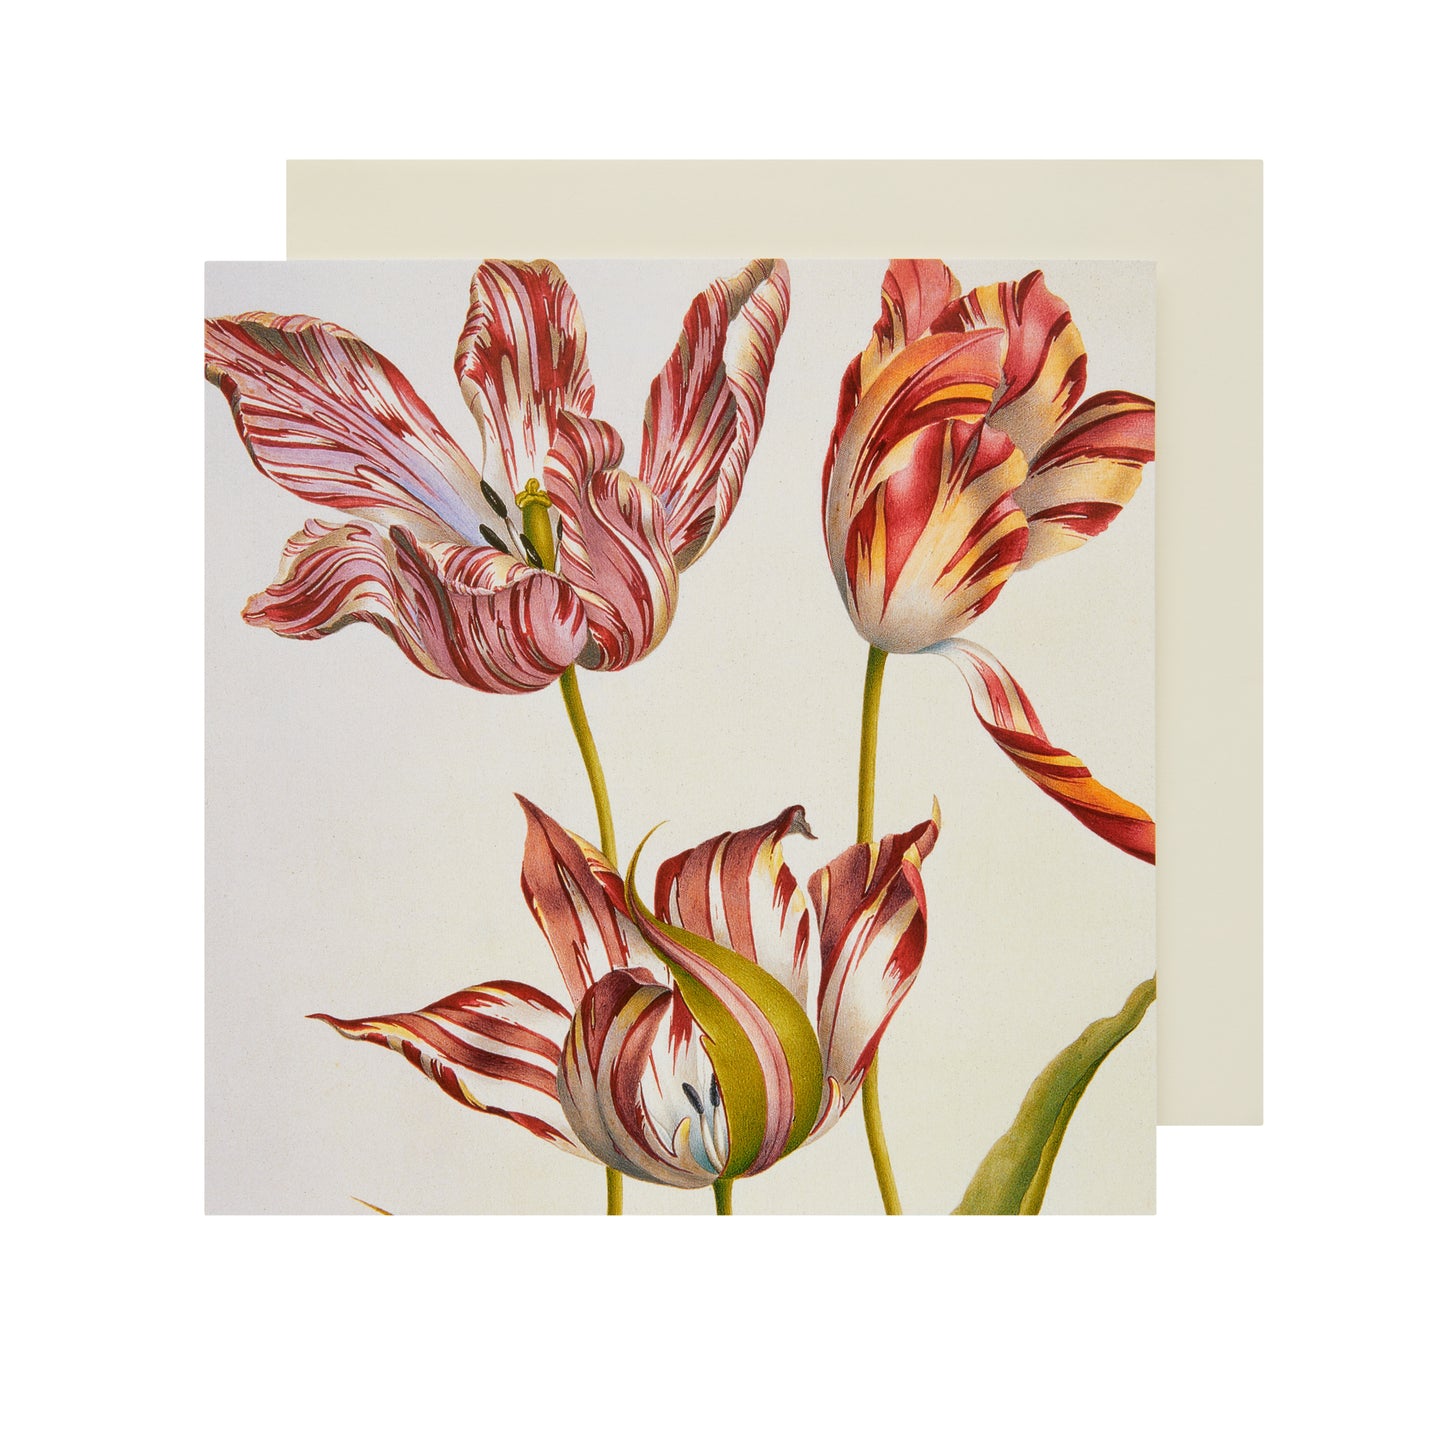 Three 'Broken' Tulips - Greeting card